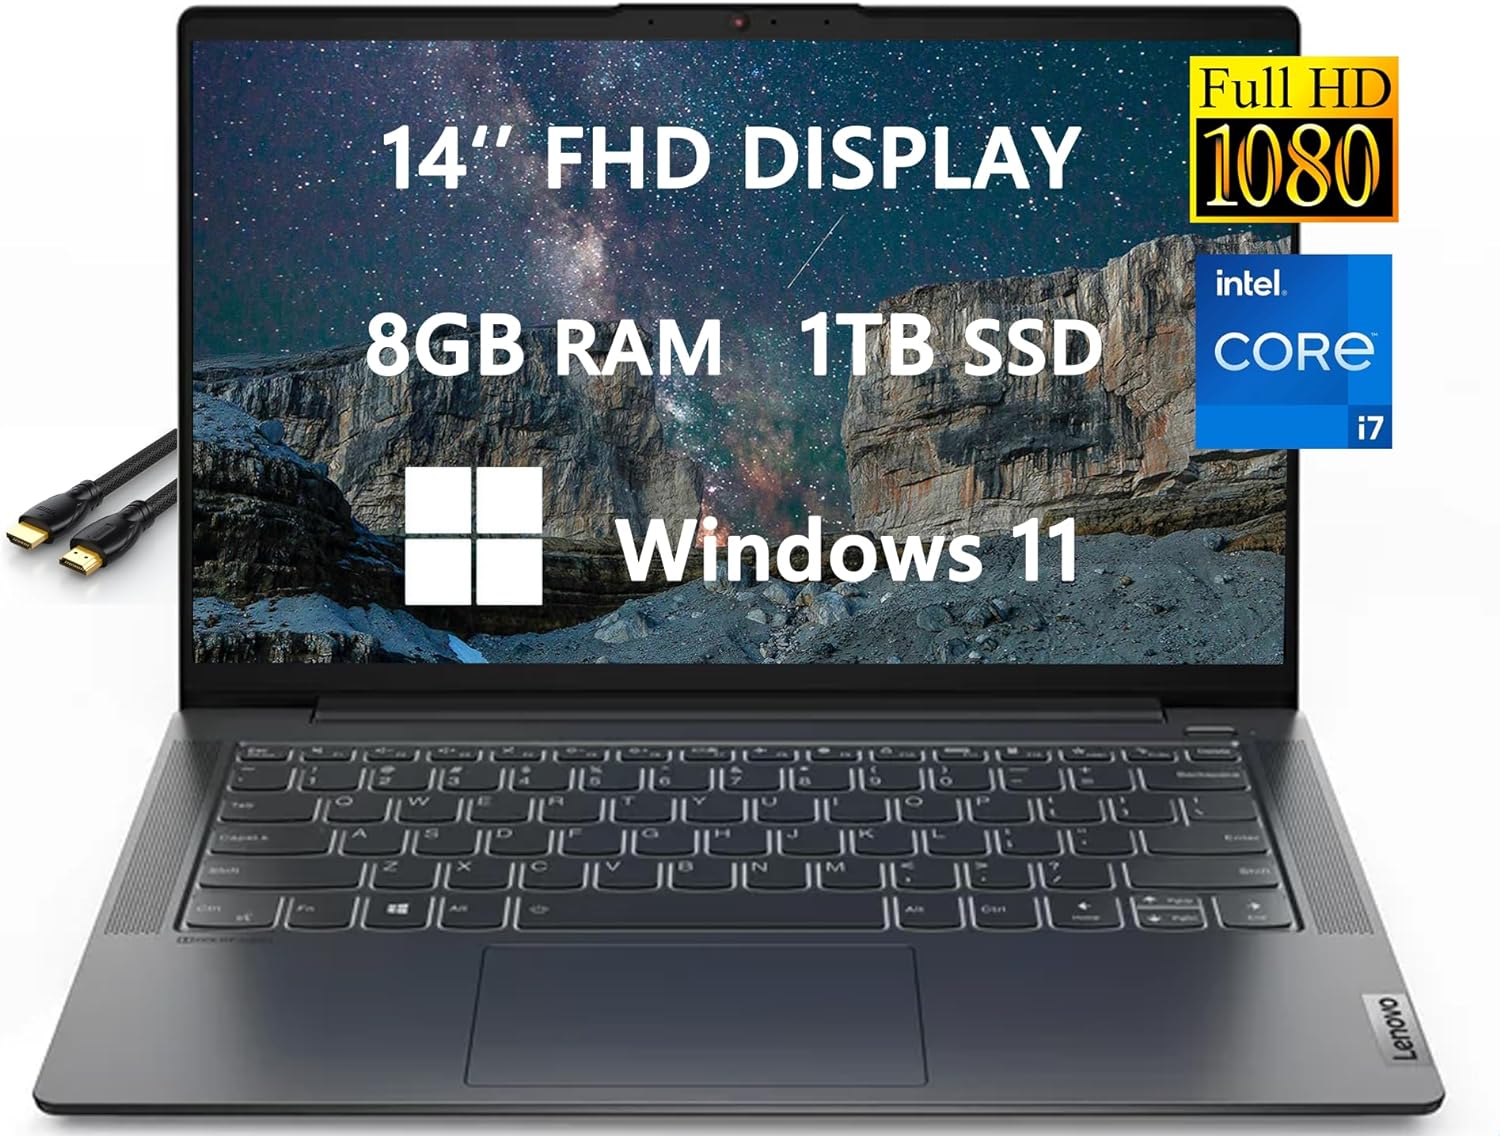  Newest HP Pavilion - 15.6 IPS FHD Display - Ryzen 7 4700U -  Backlit Keyboard - Latest WiFi 6 - Bluetooth 5,Bundle with Woov Accessories  - Windows 10 - Silver (16GB